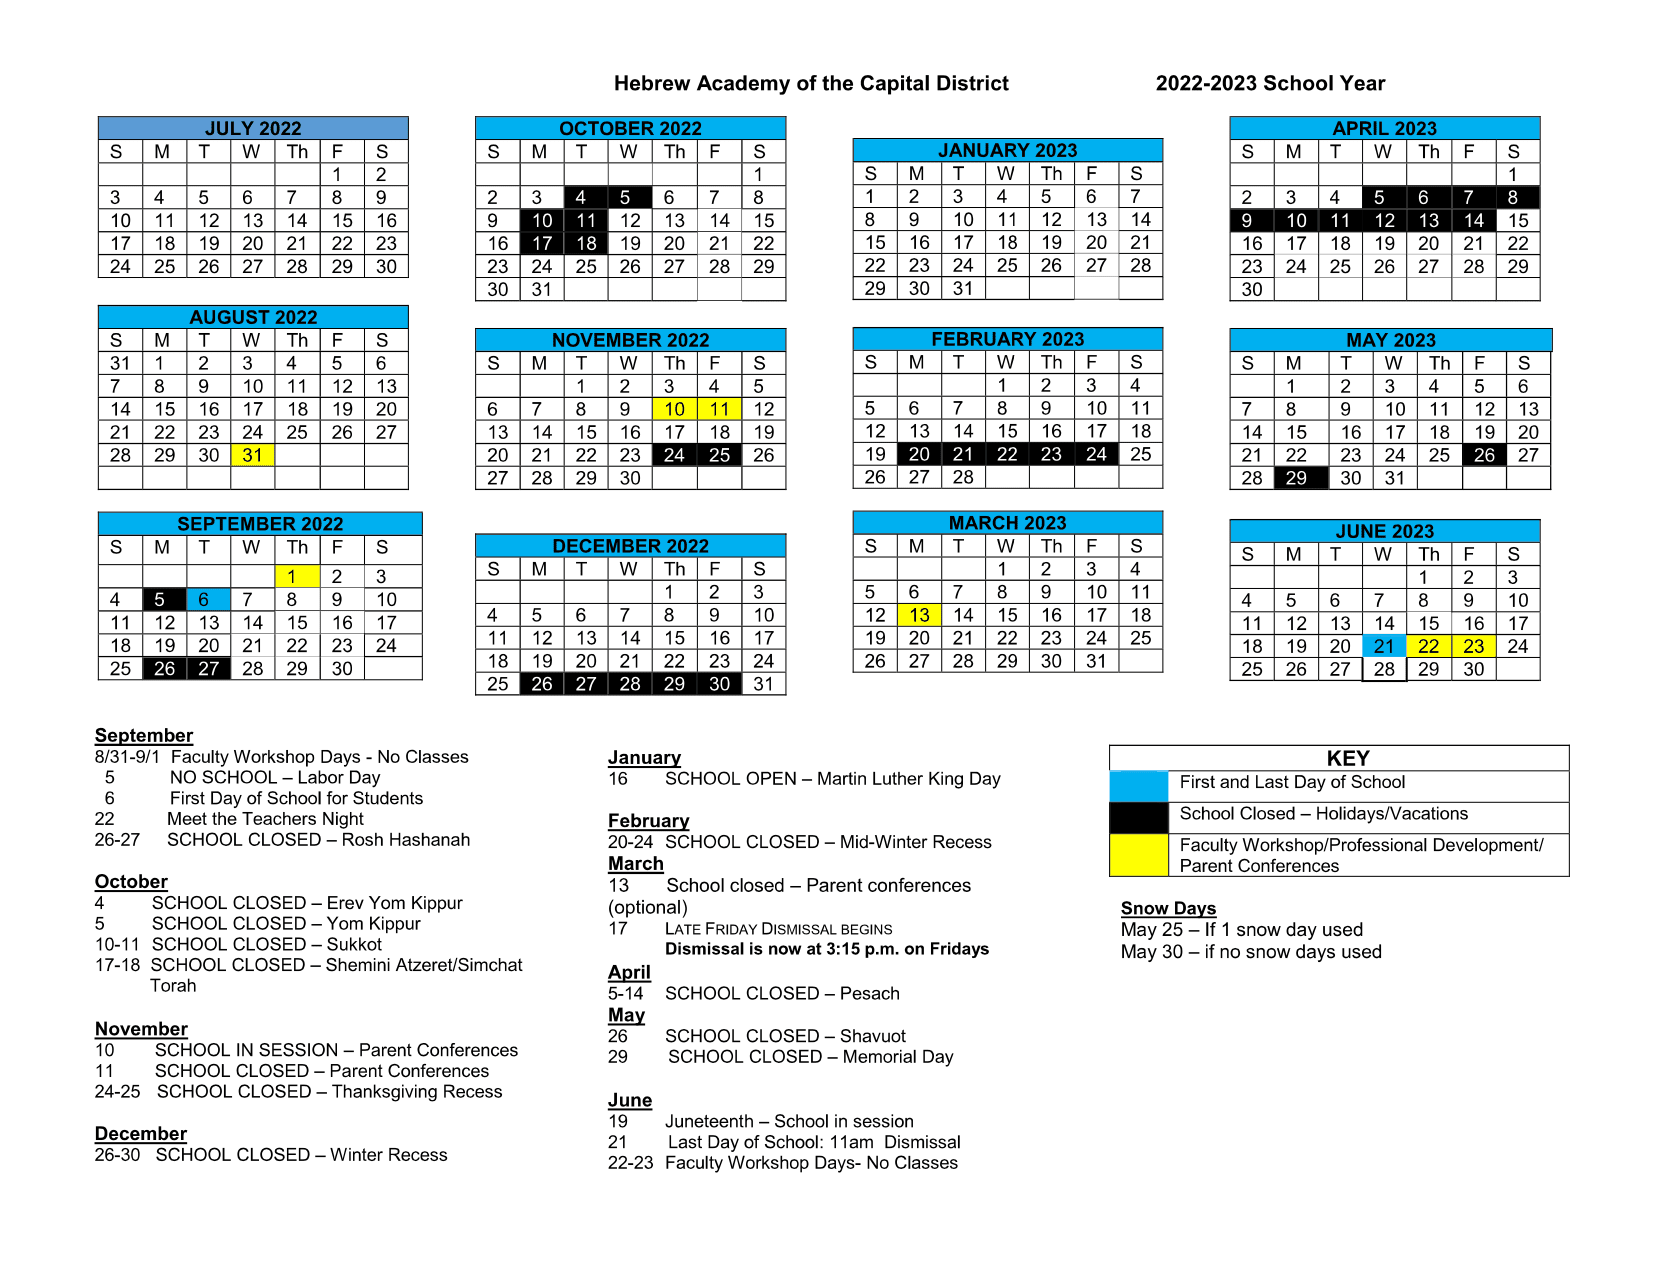 School Calendar • HACD